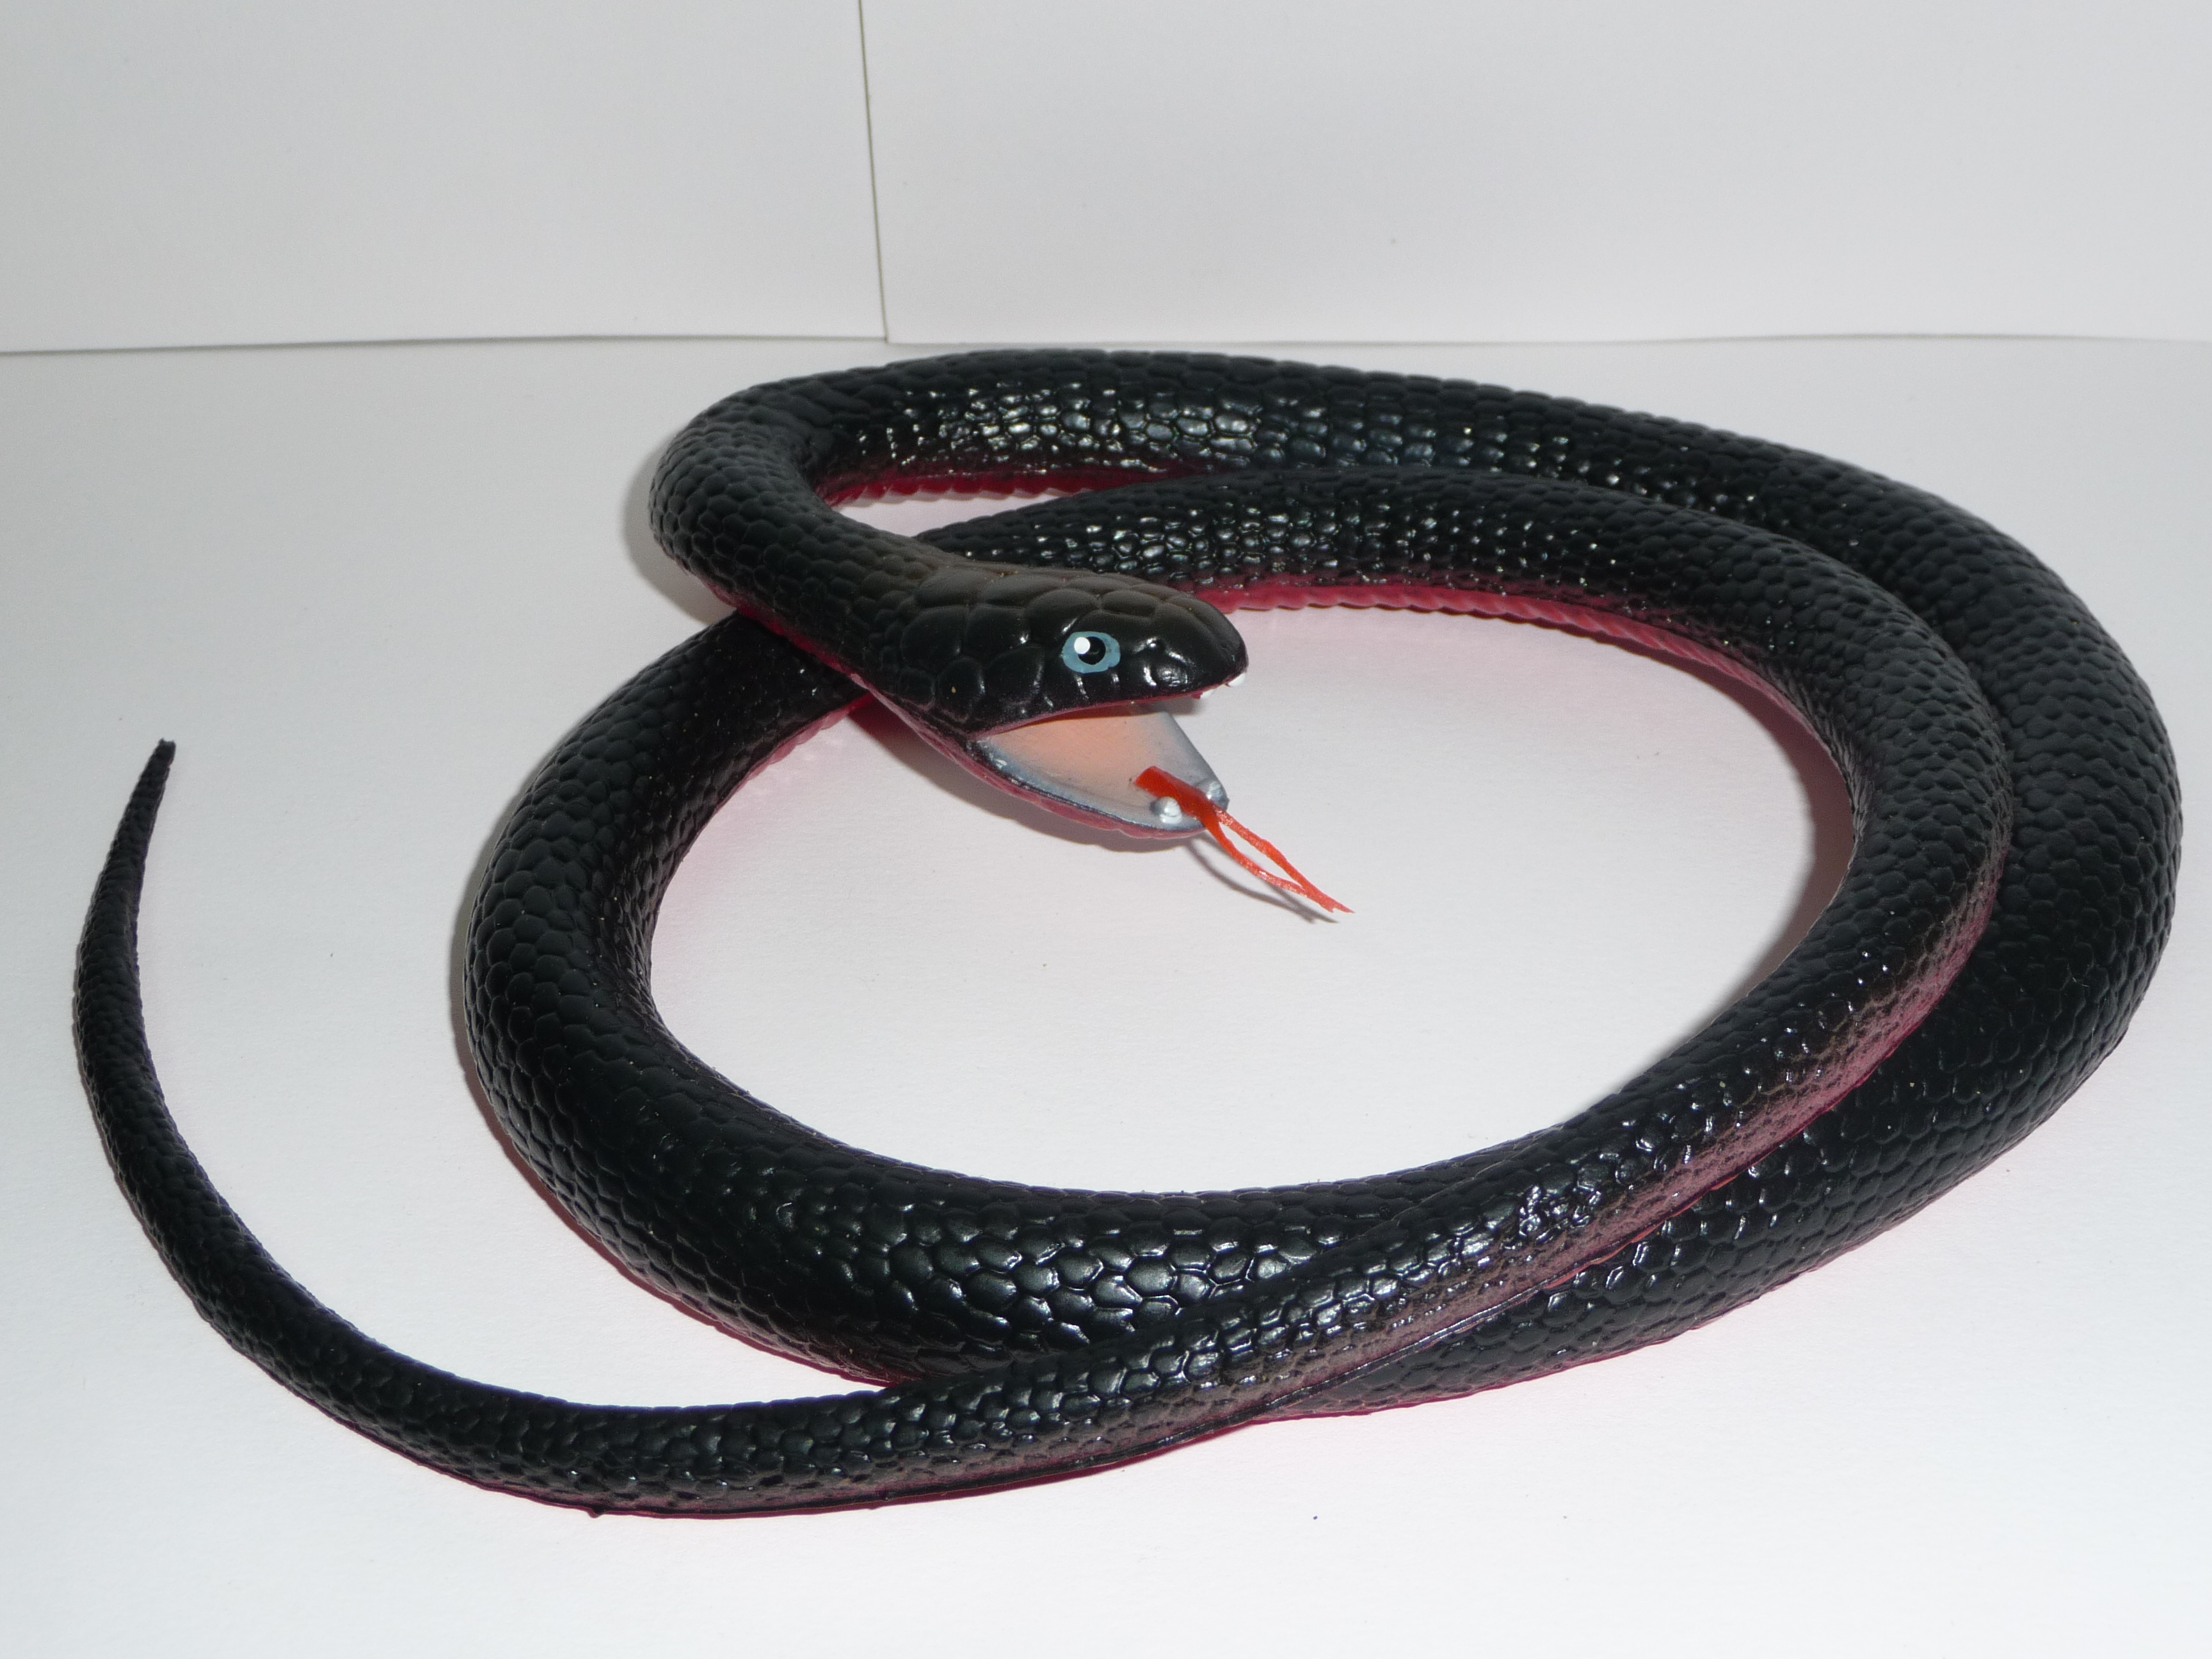 Red Bellied Black Snake 46” | Fun & Games, Montville